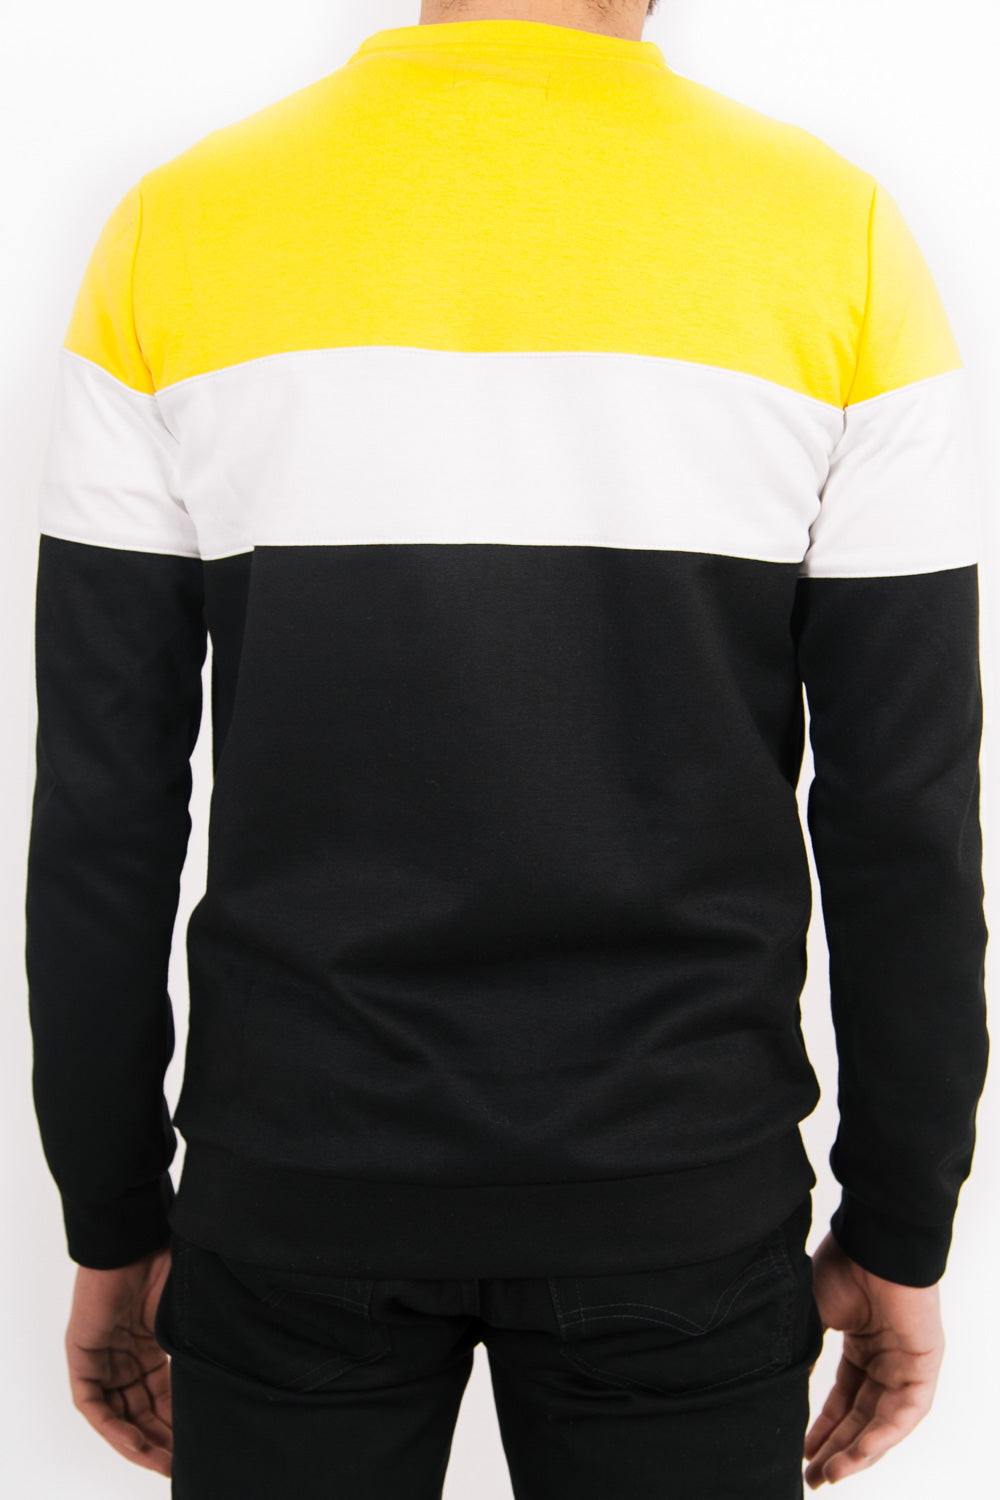 Sixth June - Sweat tricolore logo noir jaune blanc